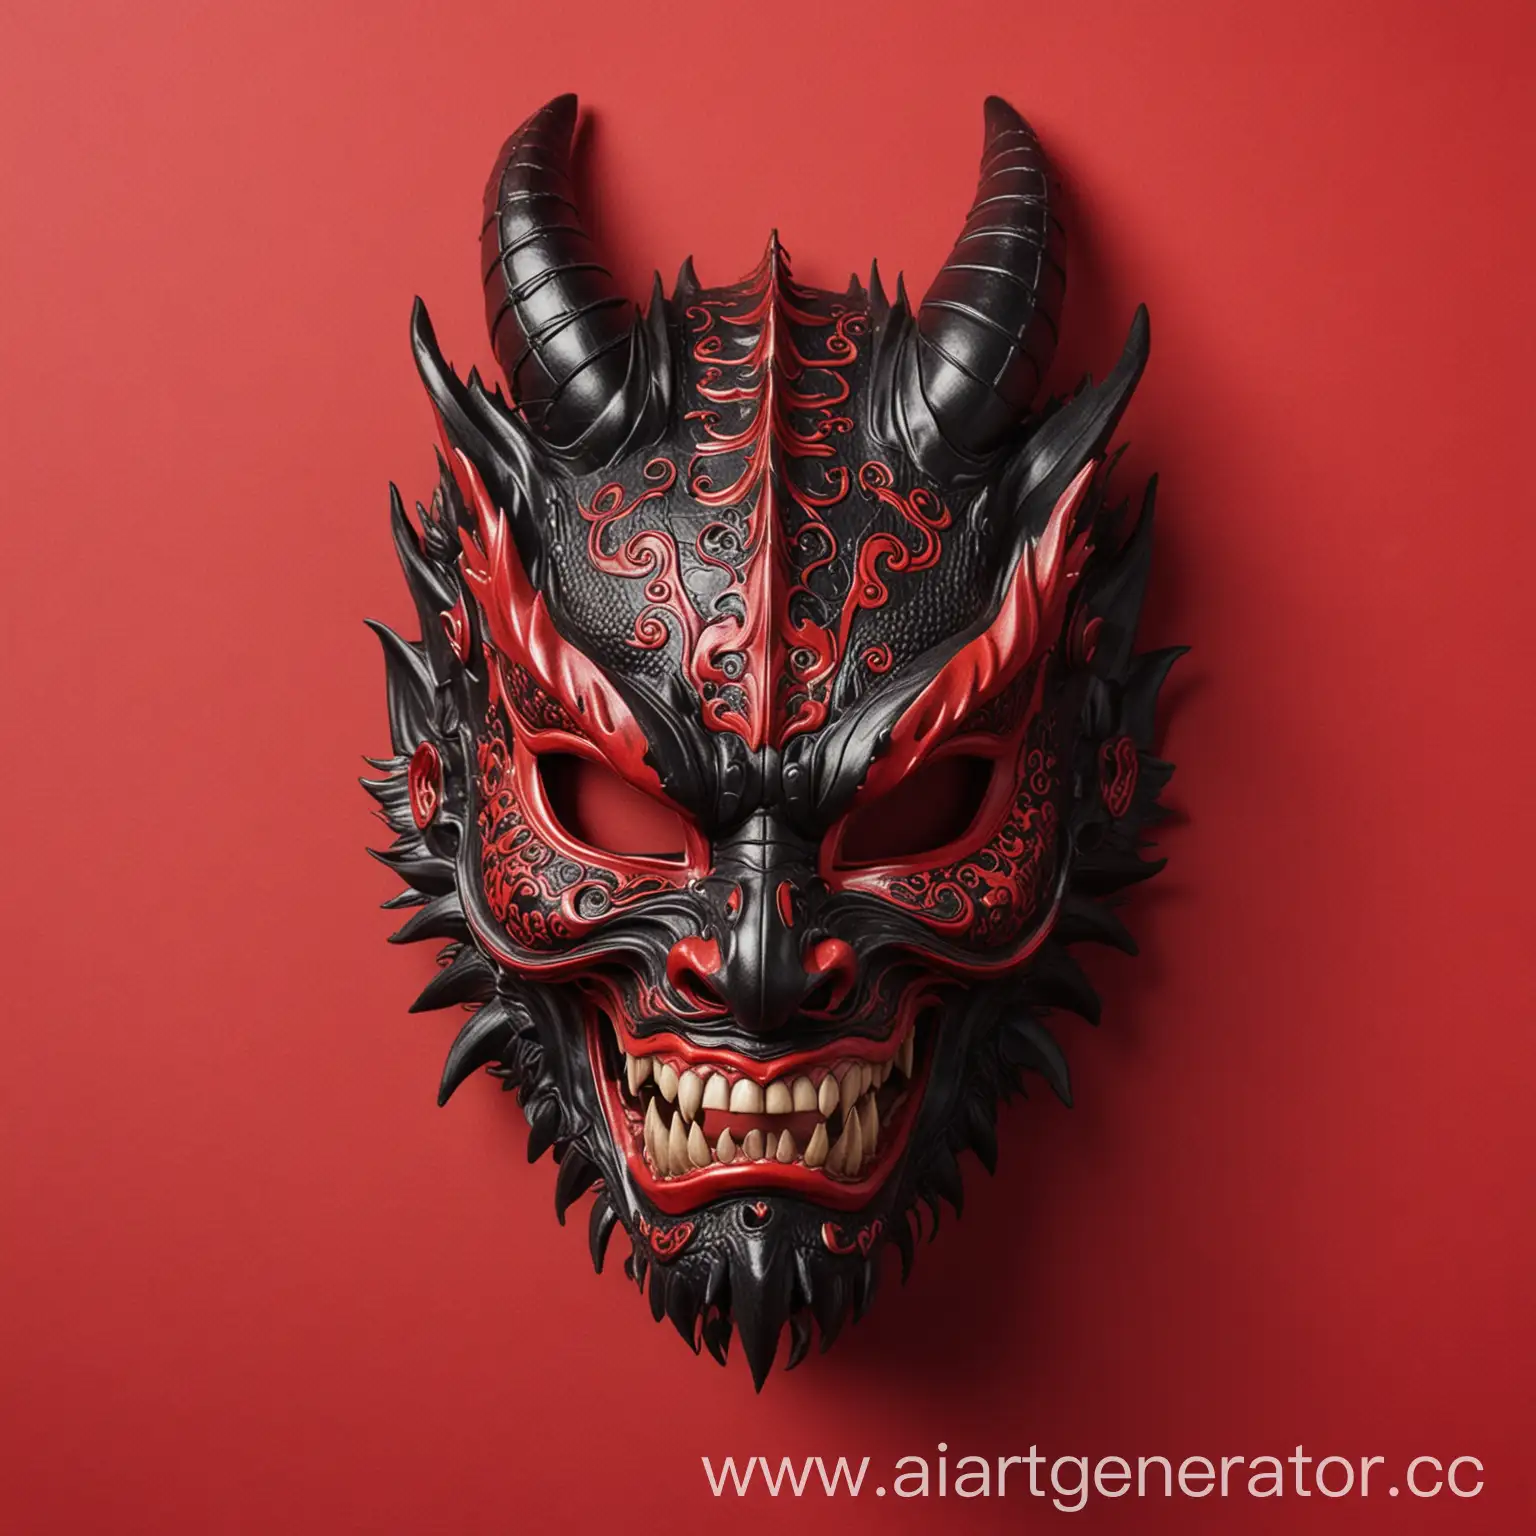 Black-Japanese-Dragon-Mask-on-Red-Background